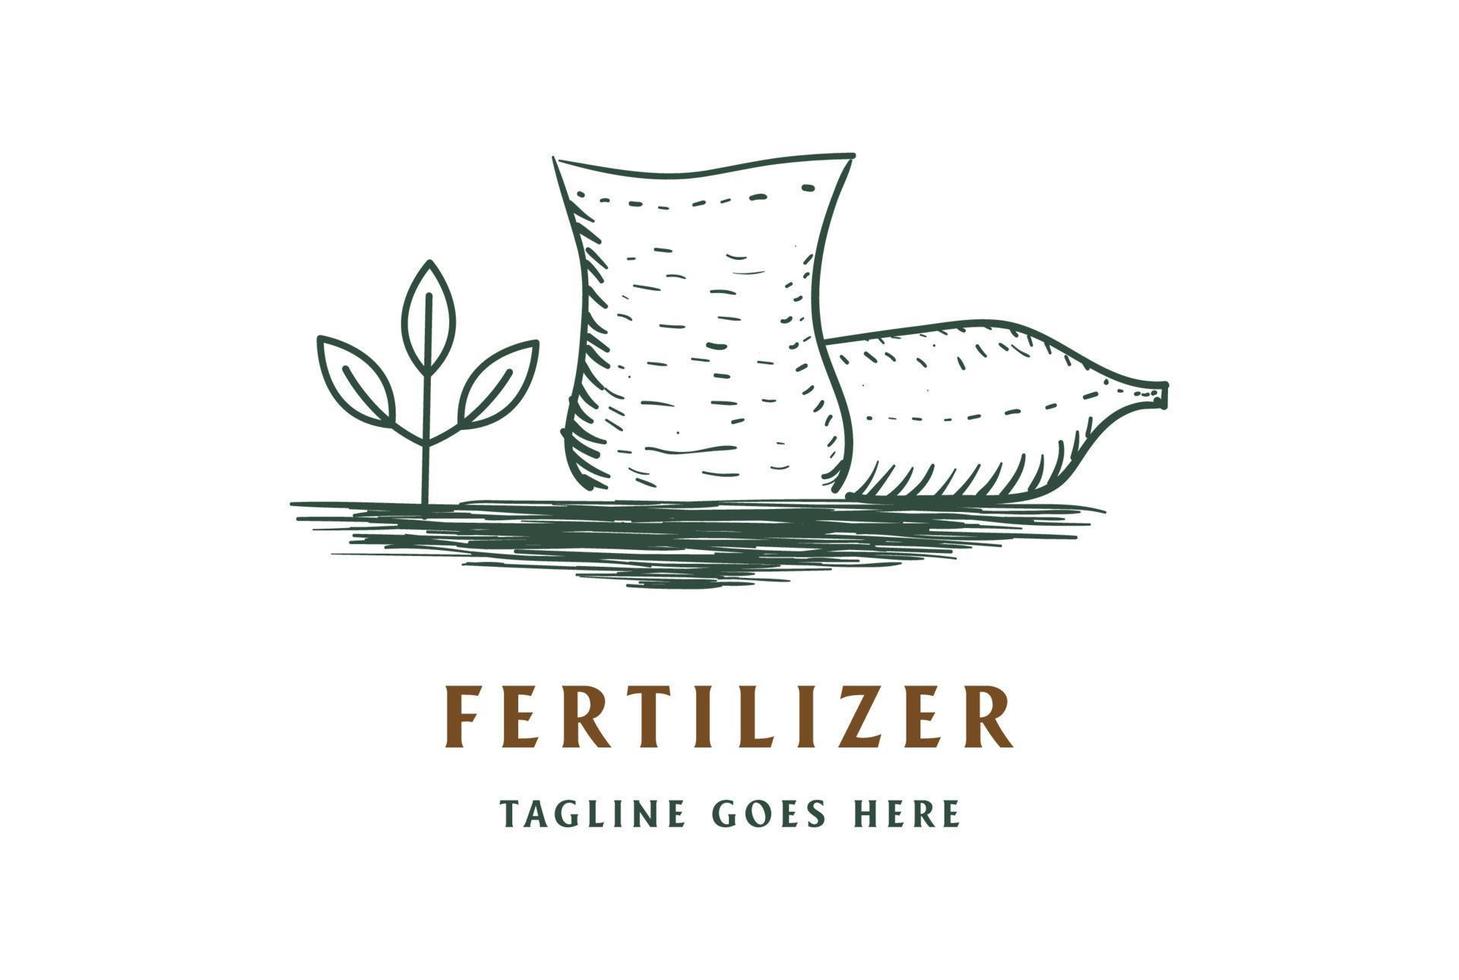 saco de fertilizante vintage retrô para cultivar vetor de design de logotipo de fazenda ou jardim